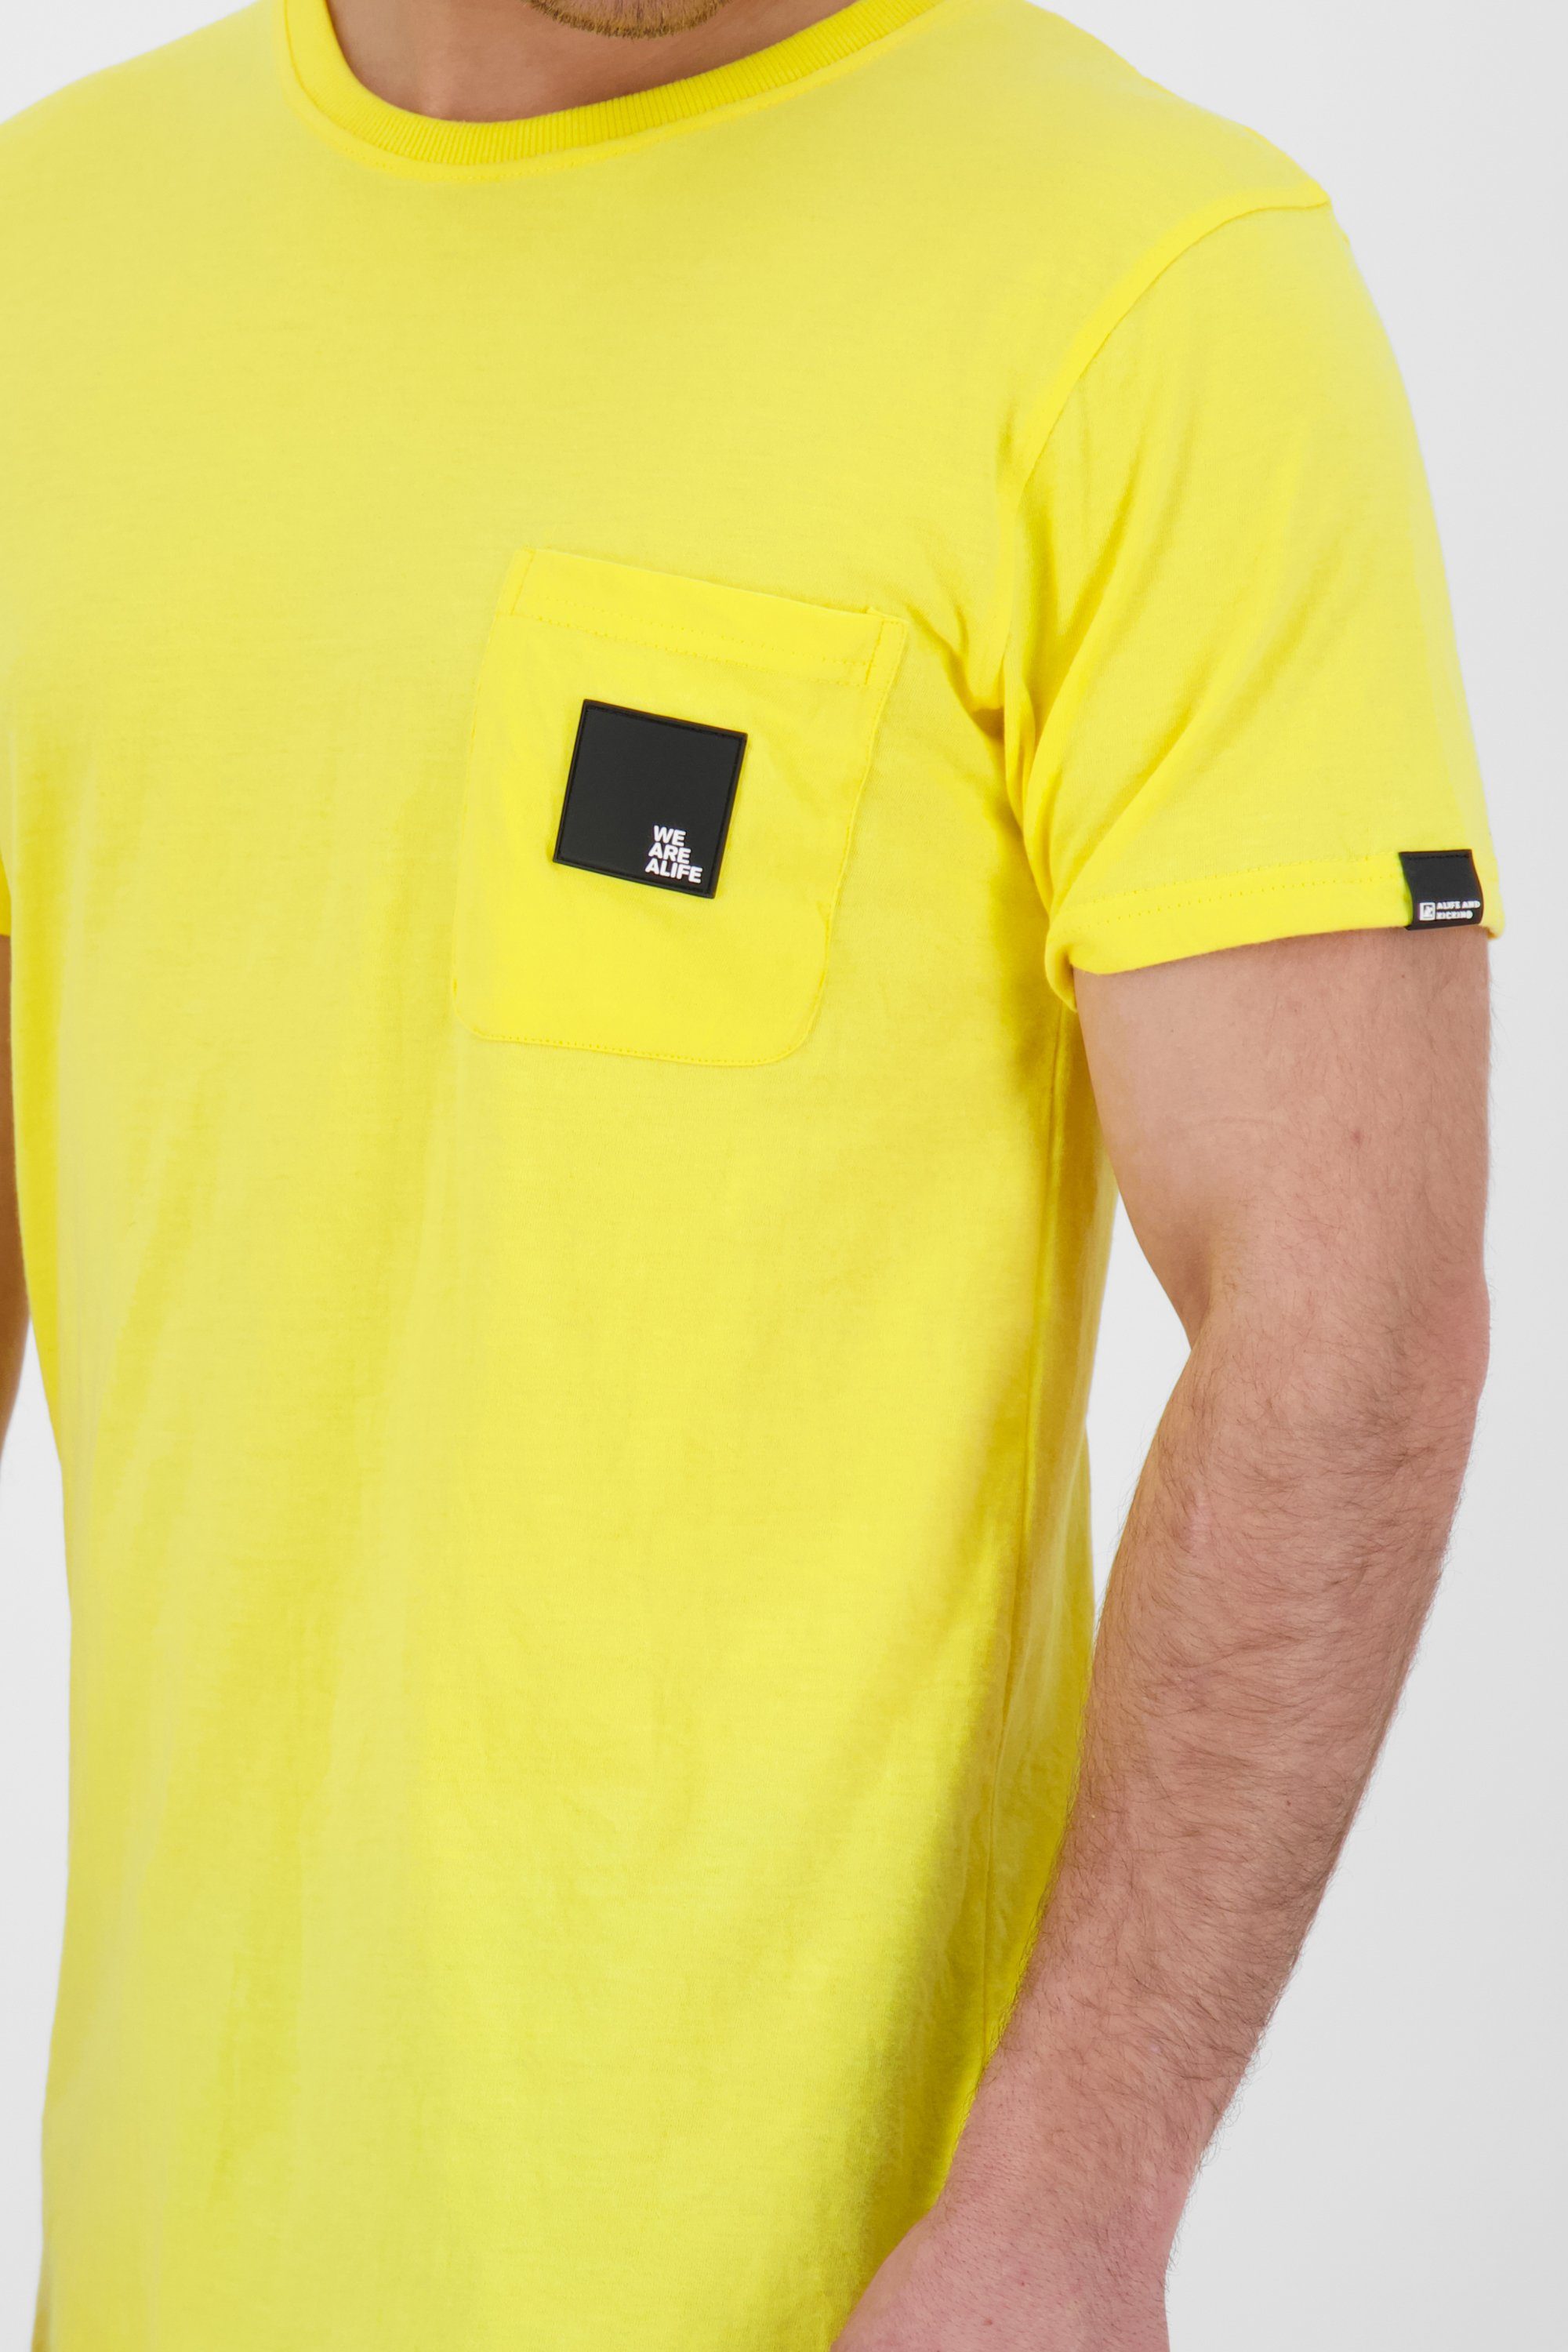 T-Shirt Herren lime T-Shirt Logo Alife PocketAK Kickin &